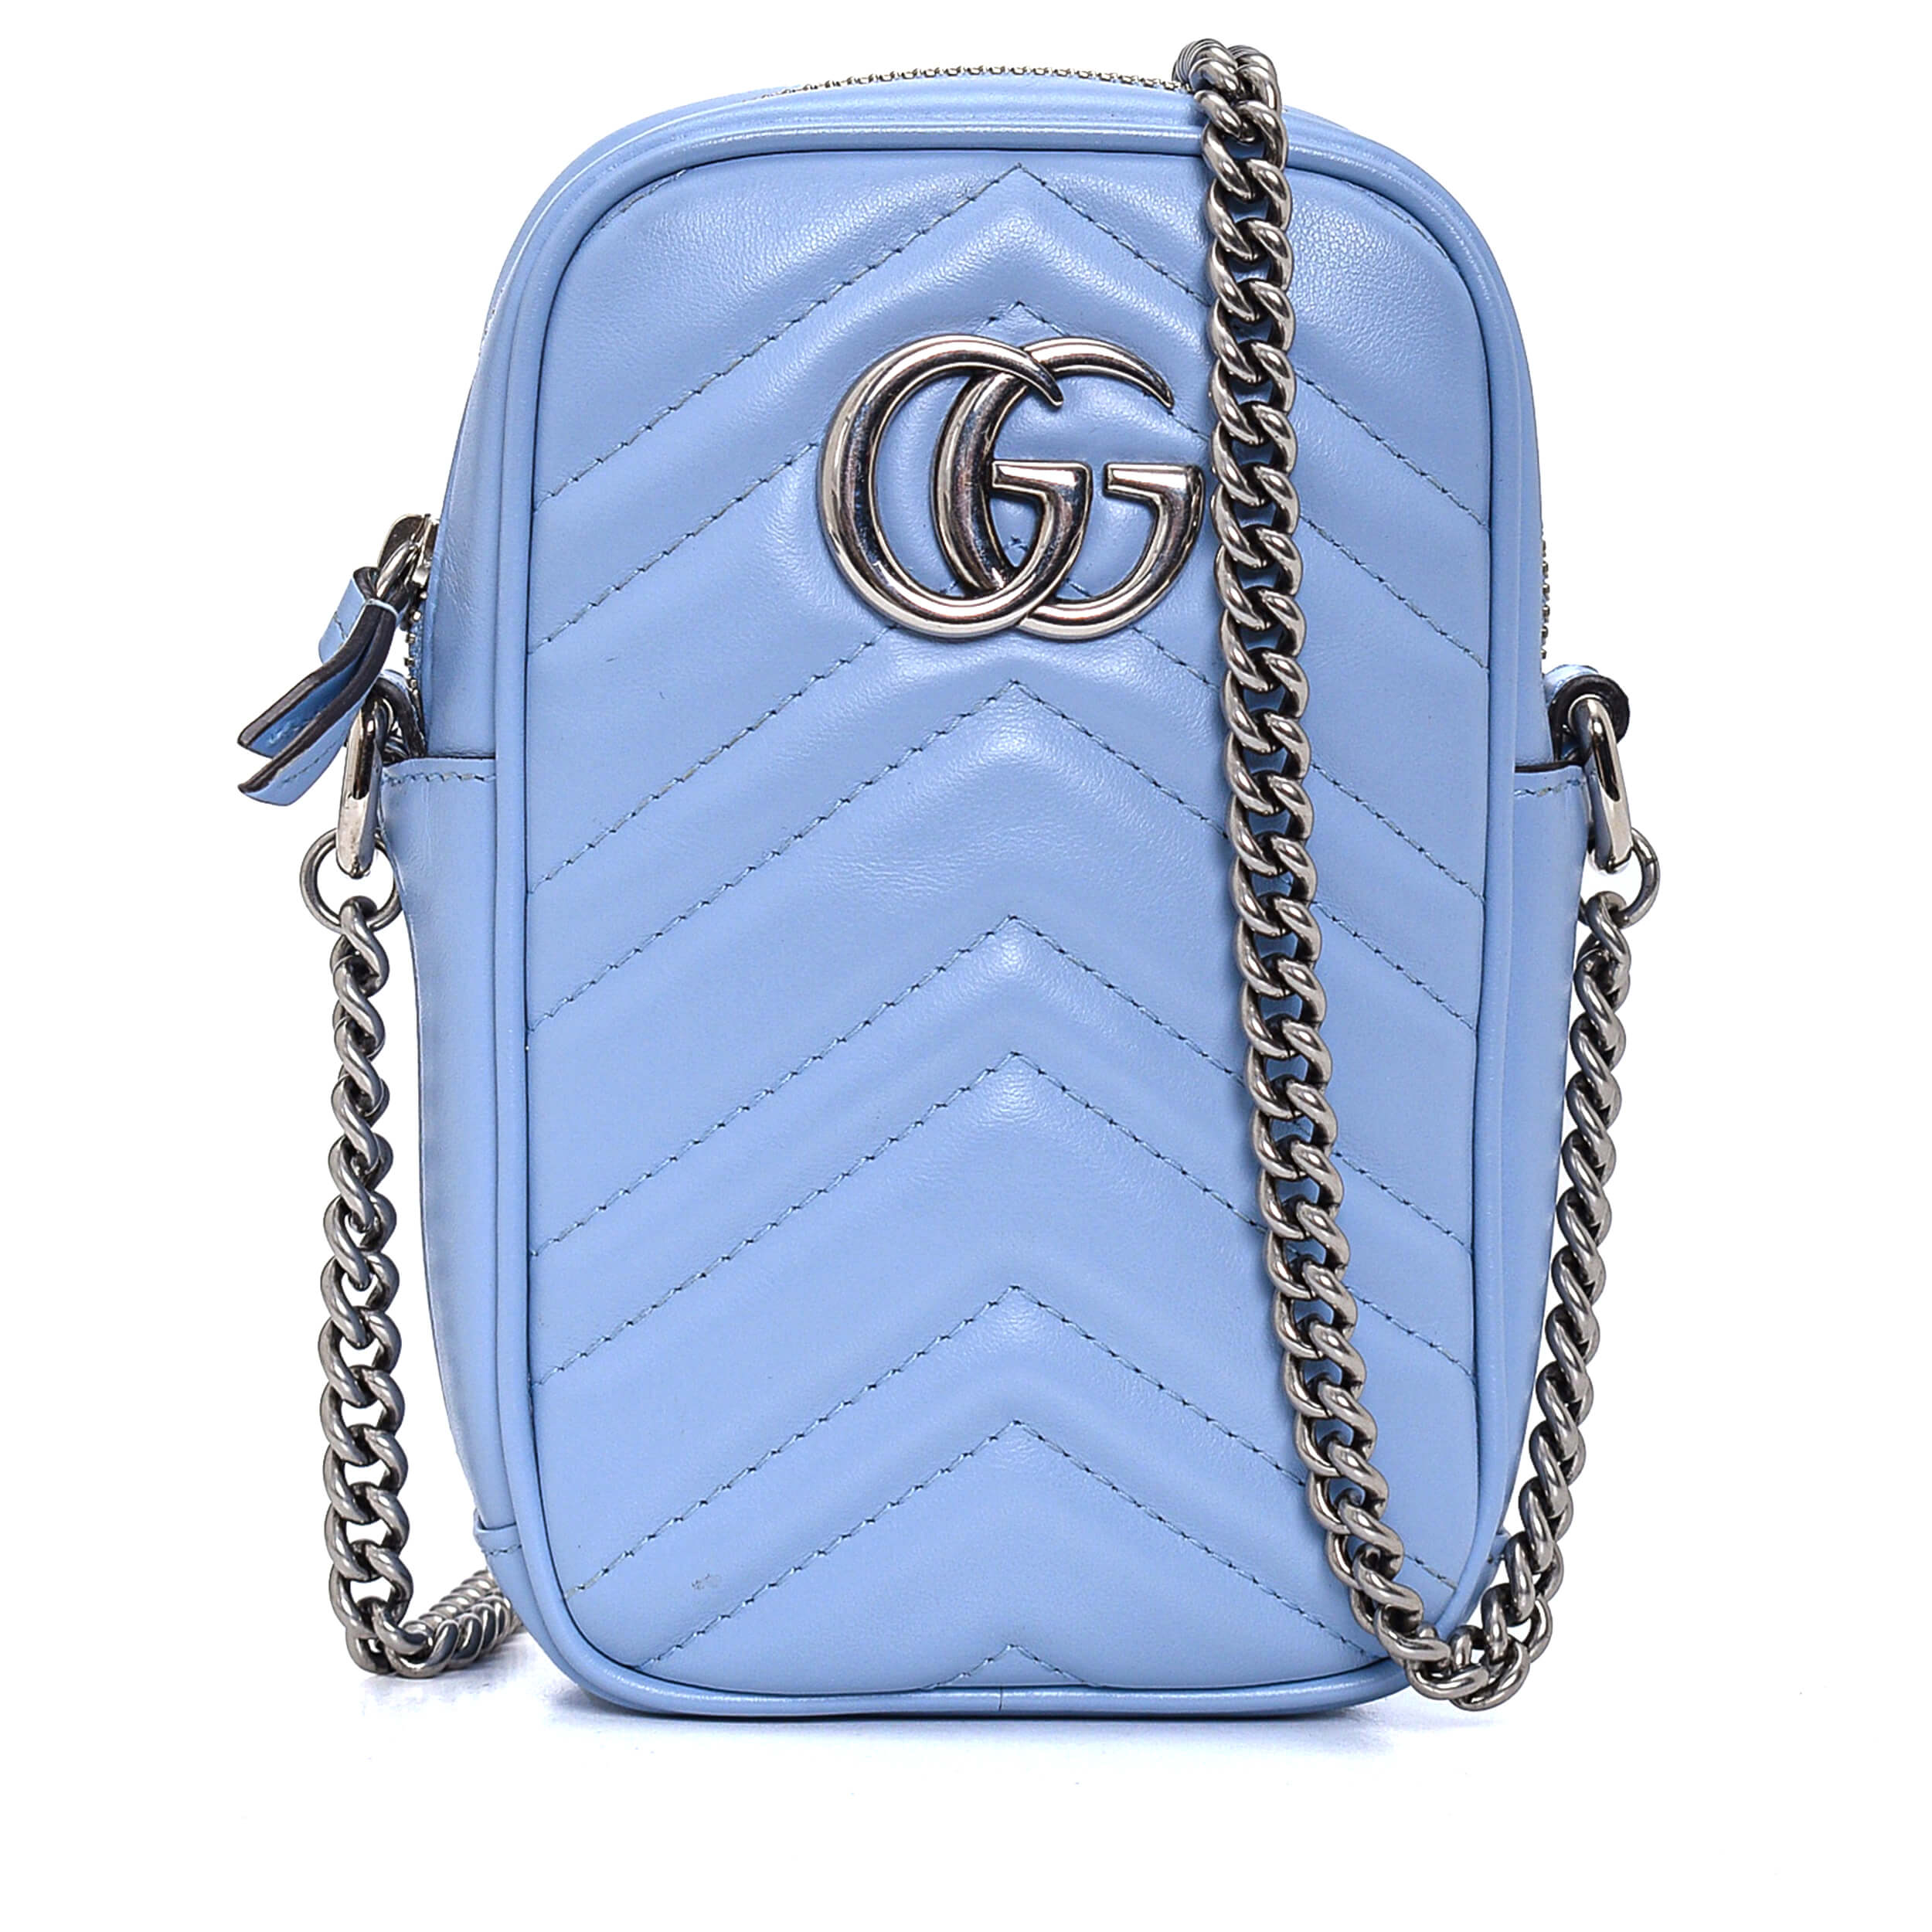 Gucci - Baby Blue GG Marmont Matelasse Phone Bag